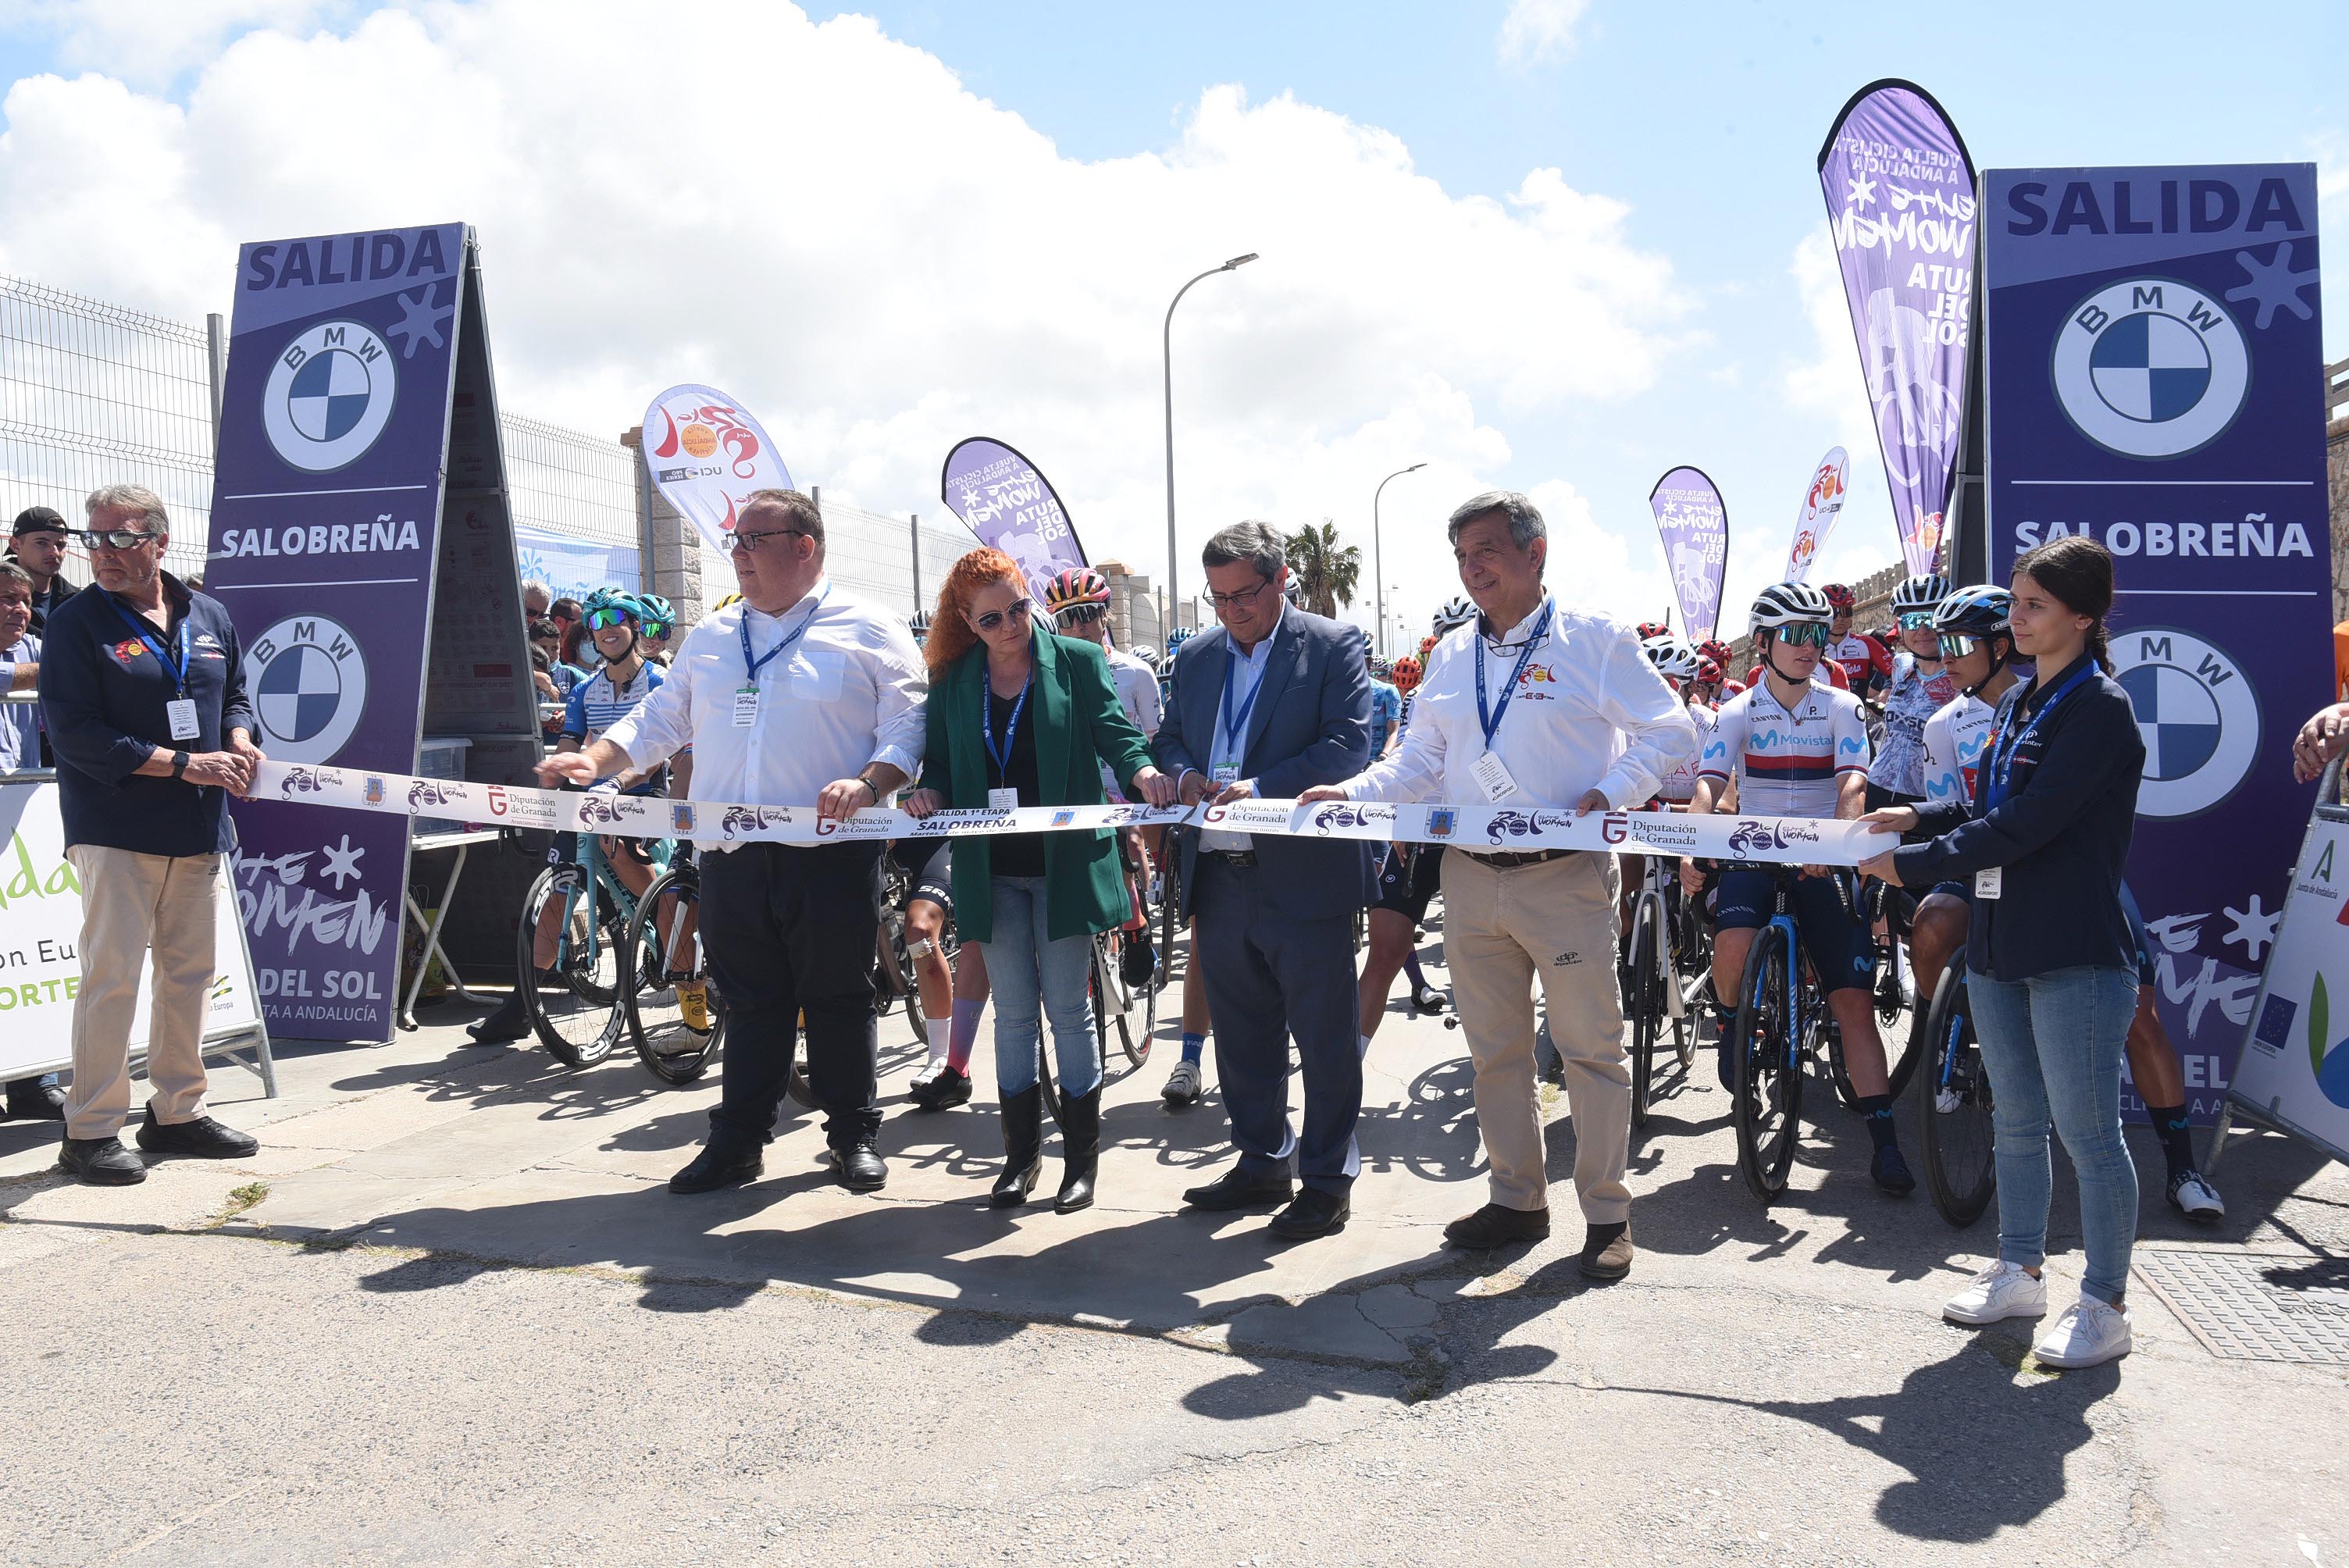 Salobreña acoge la salida de la primera vuelta ciclista a Andalucía femenina